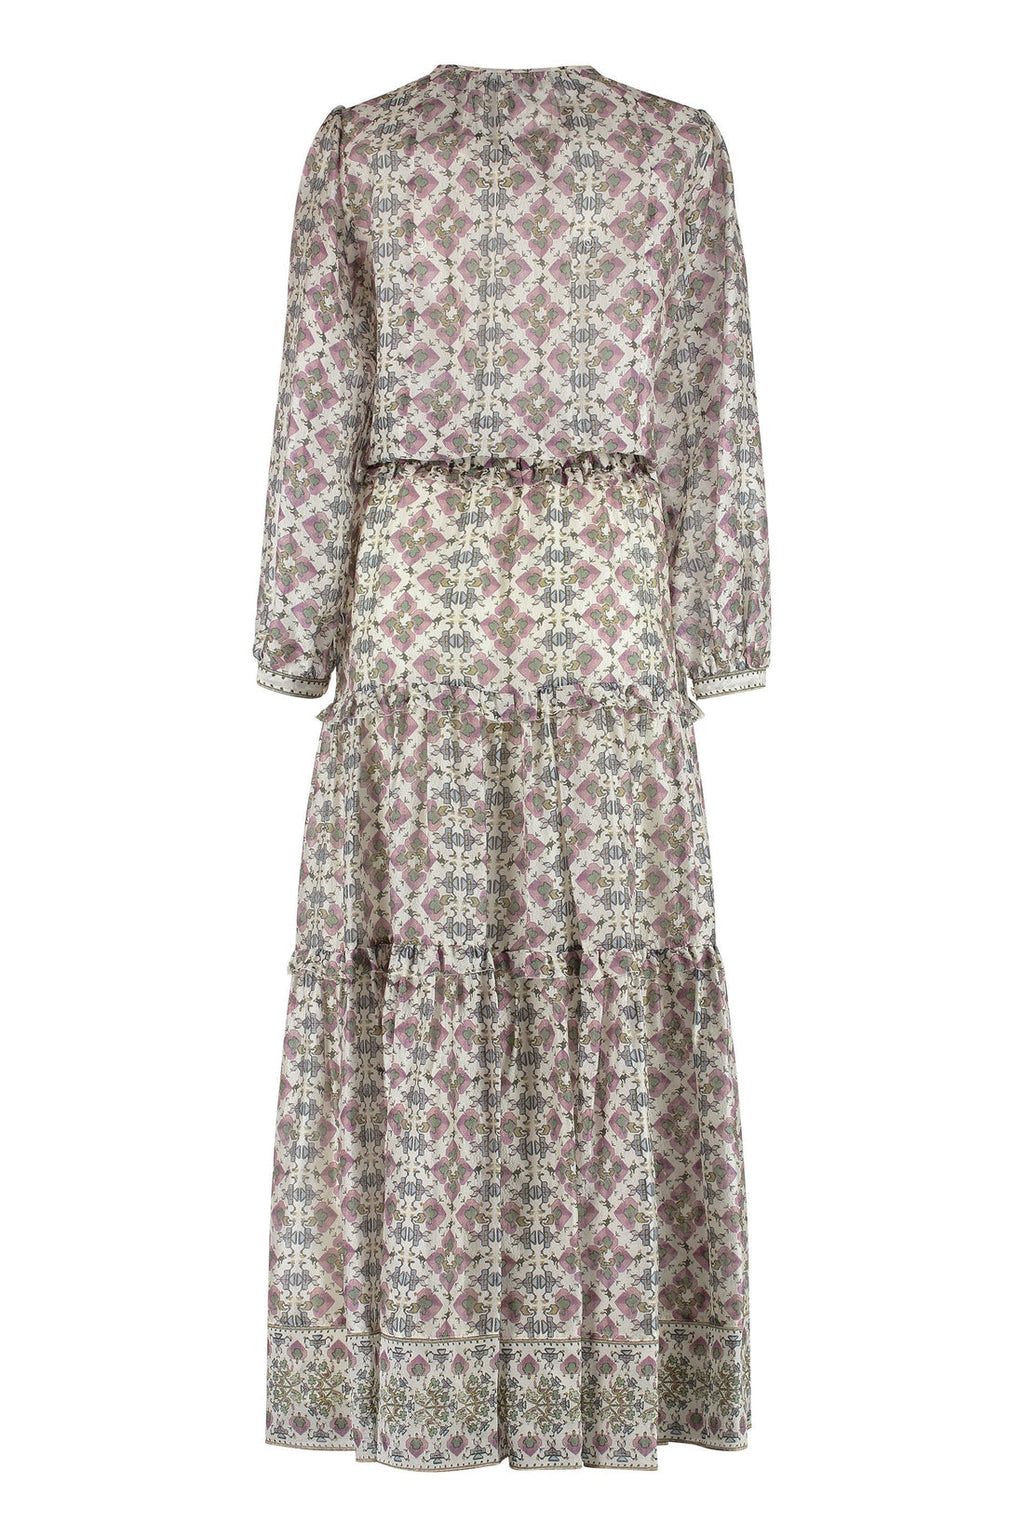 Isabel Marant-OUTLET-SALE-Mafezia printed silk dress-ARCHIVIST